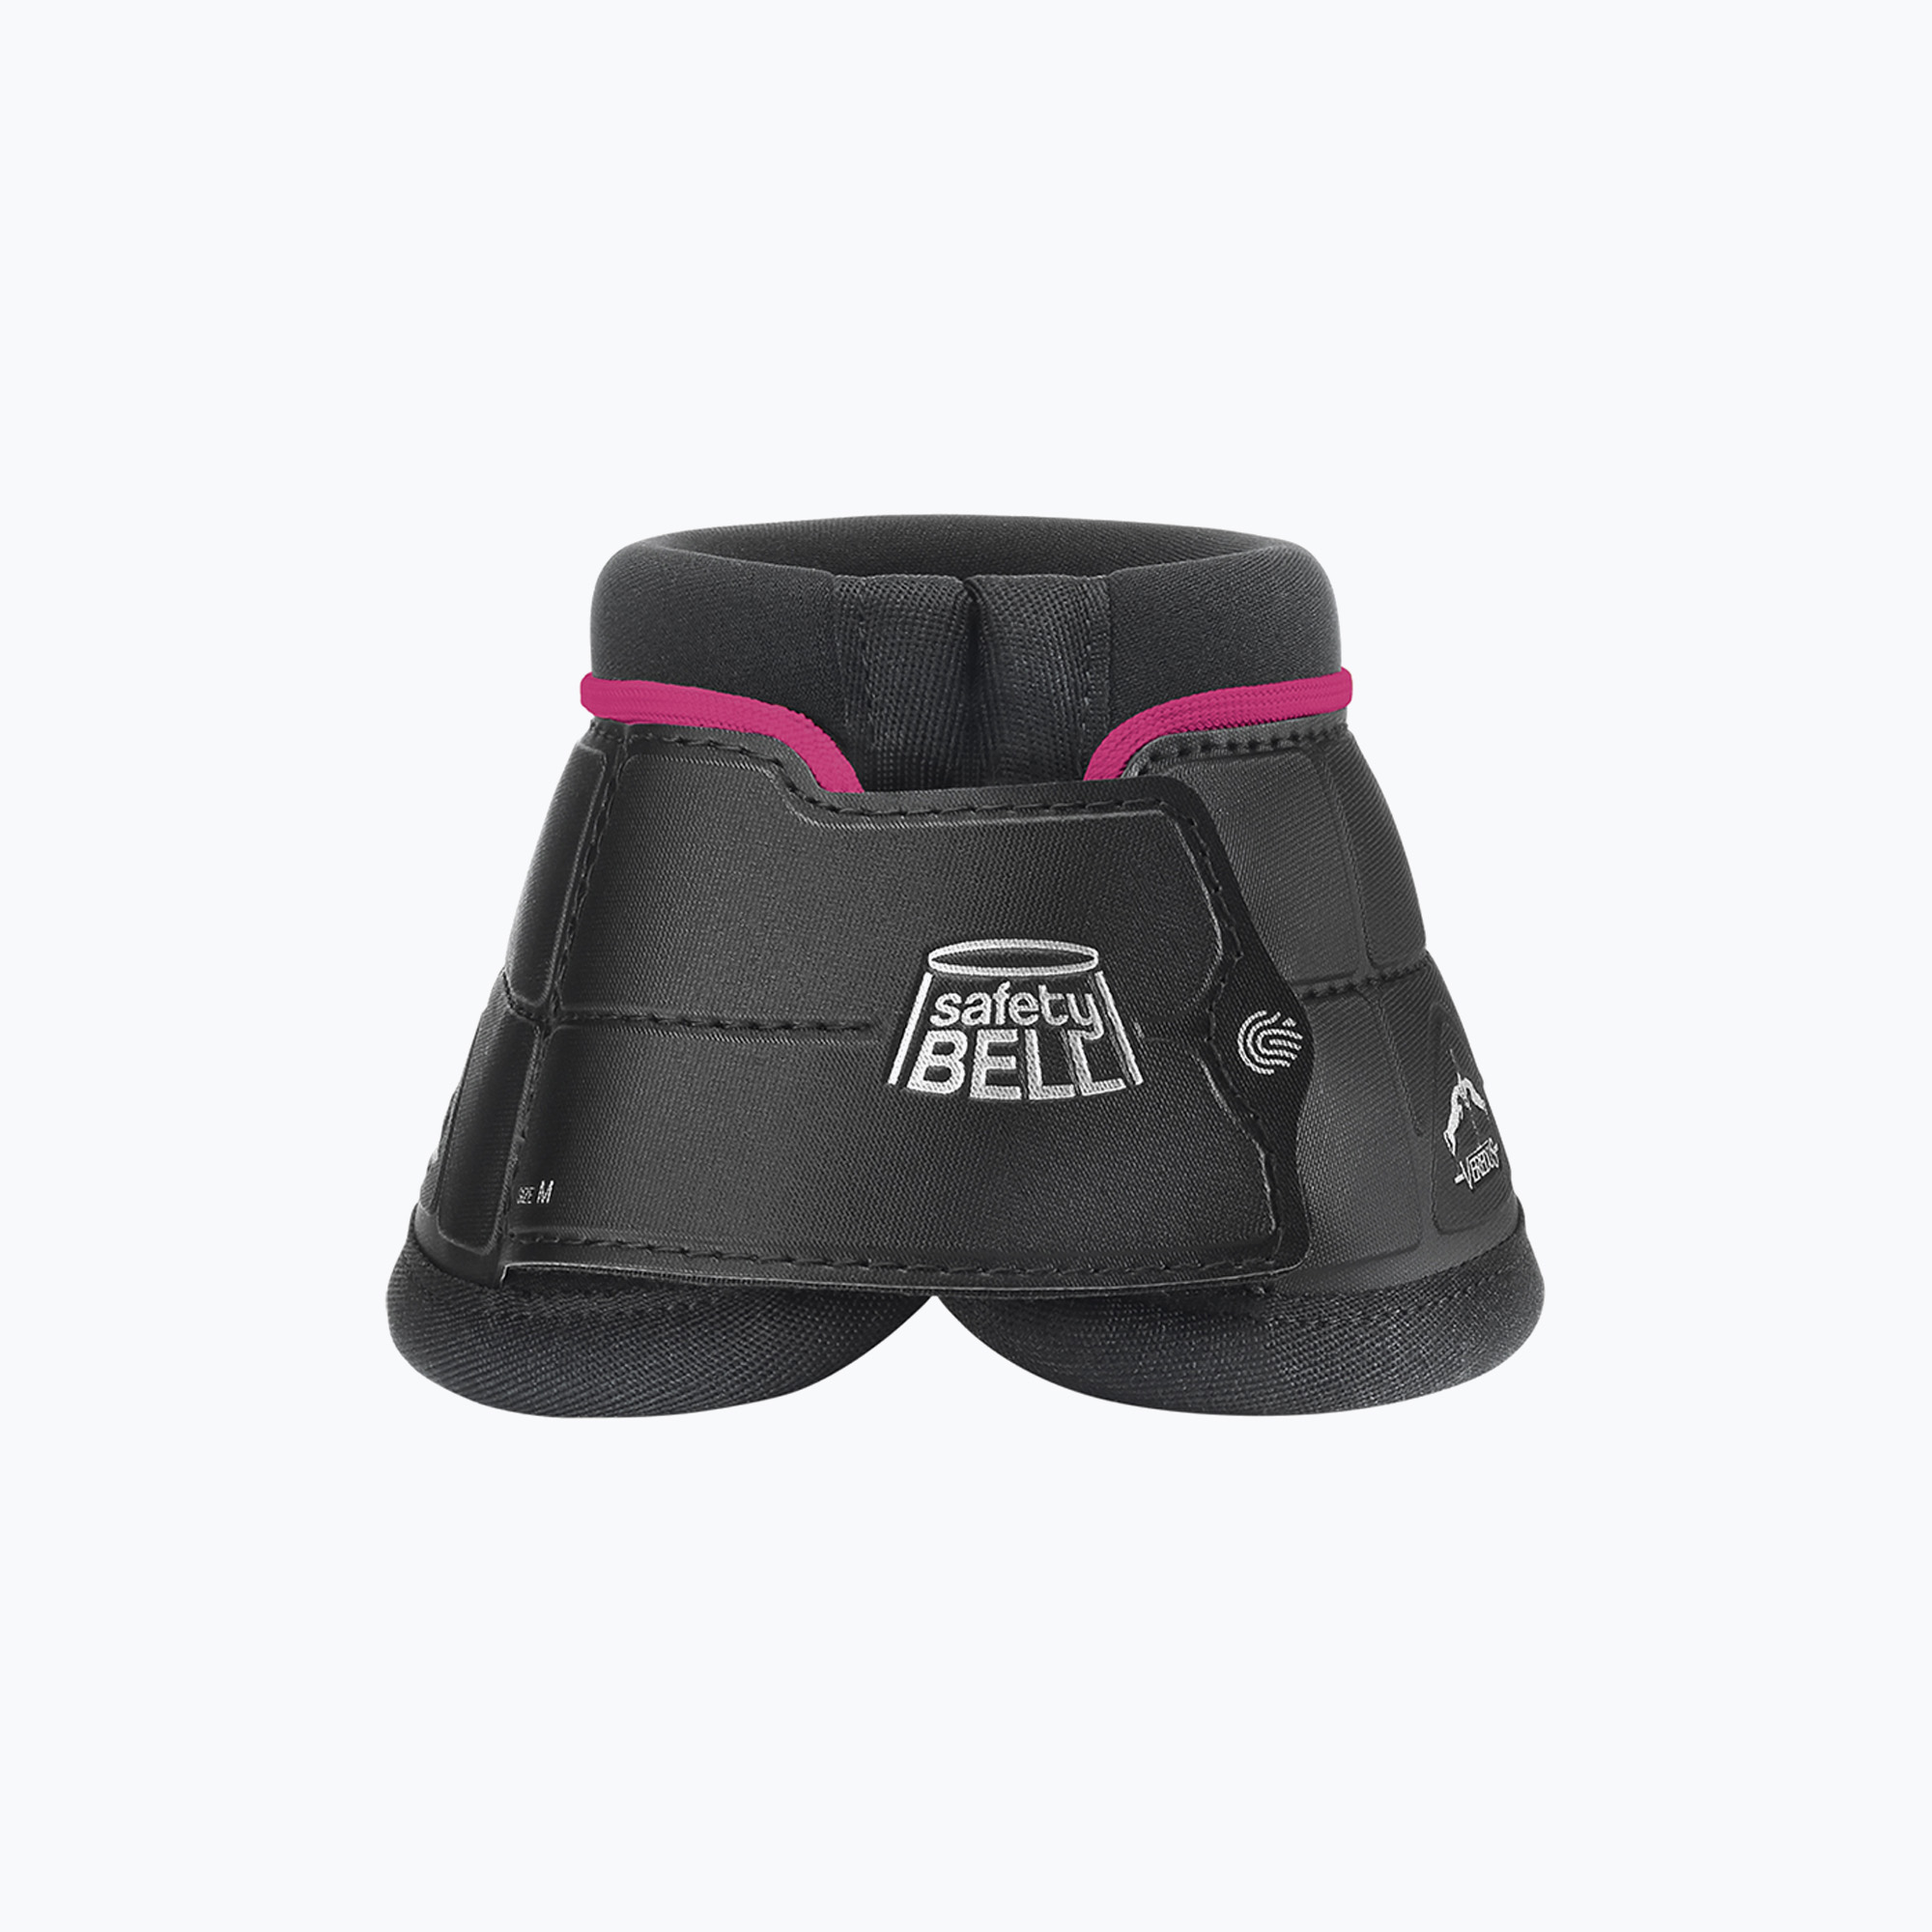 Veredus Safety Bell Clopot de siguranță Pantofi de cal colorați negru/roz SB1LP1